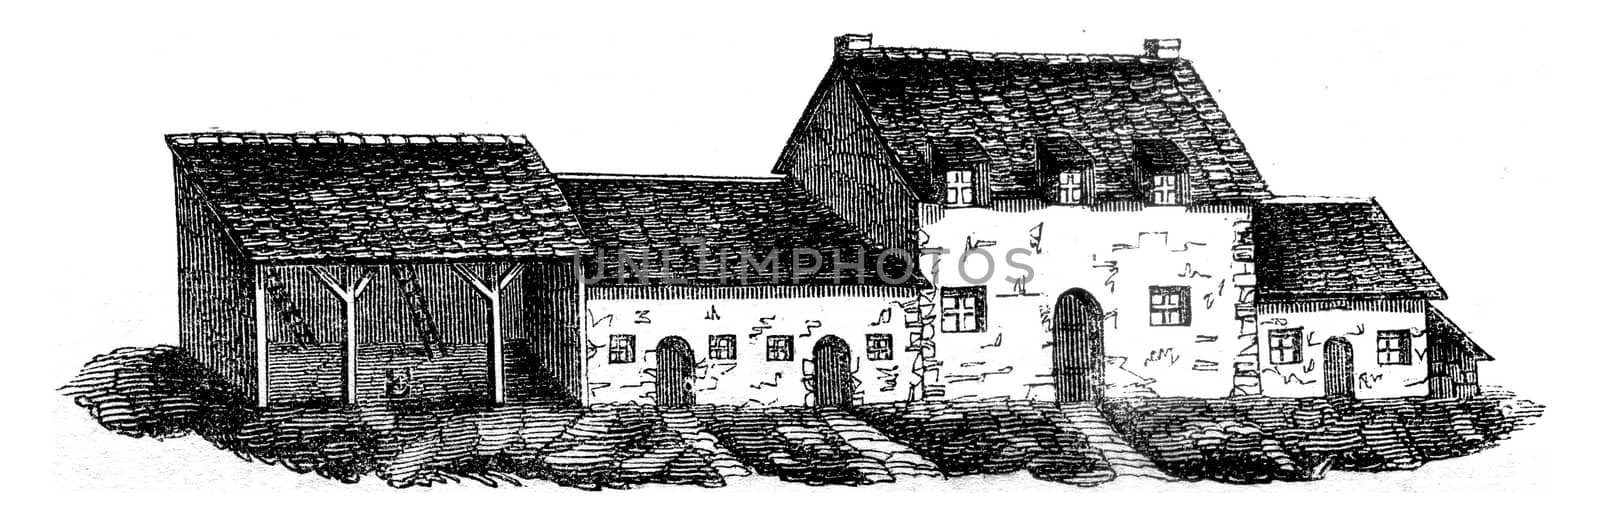 Department of North Cotes, Large farm back 500 francs, vintage engraved illustration. Magasin Pittoresque 1845.
